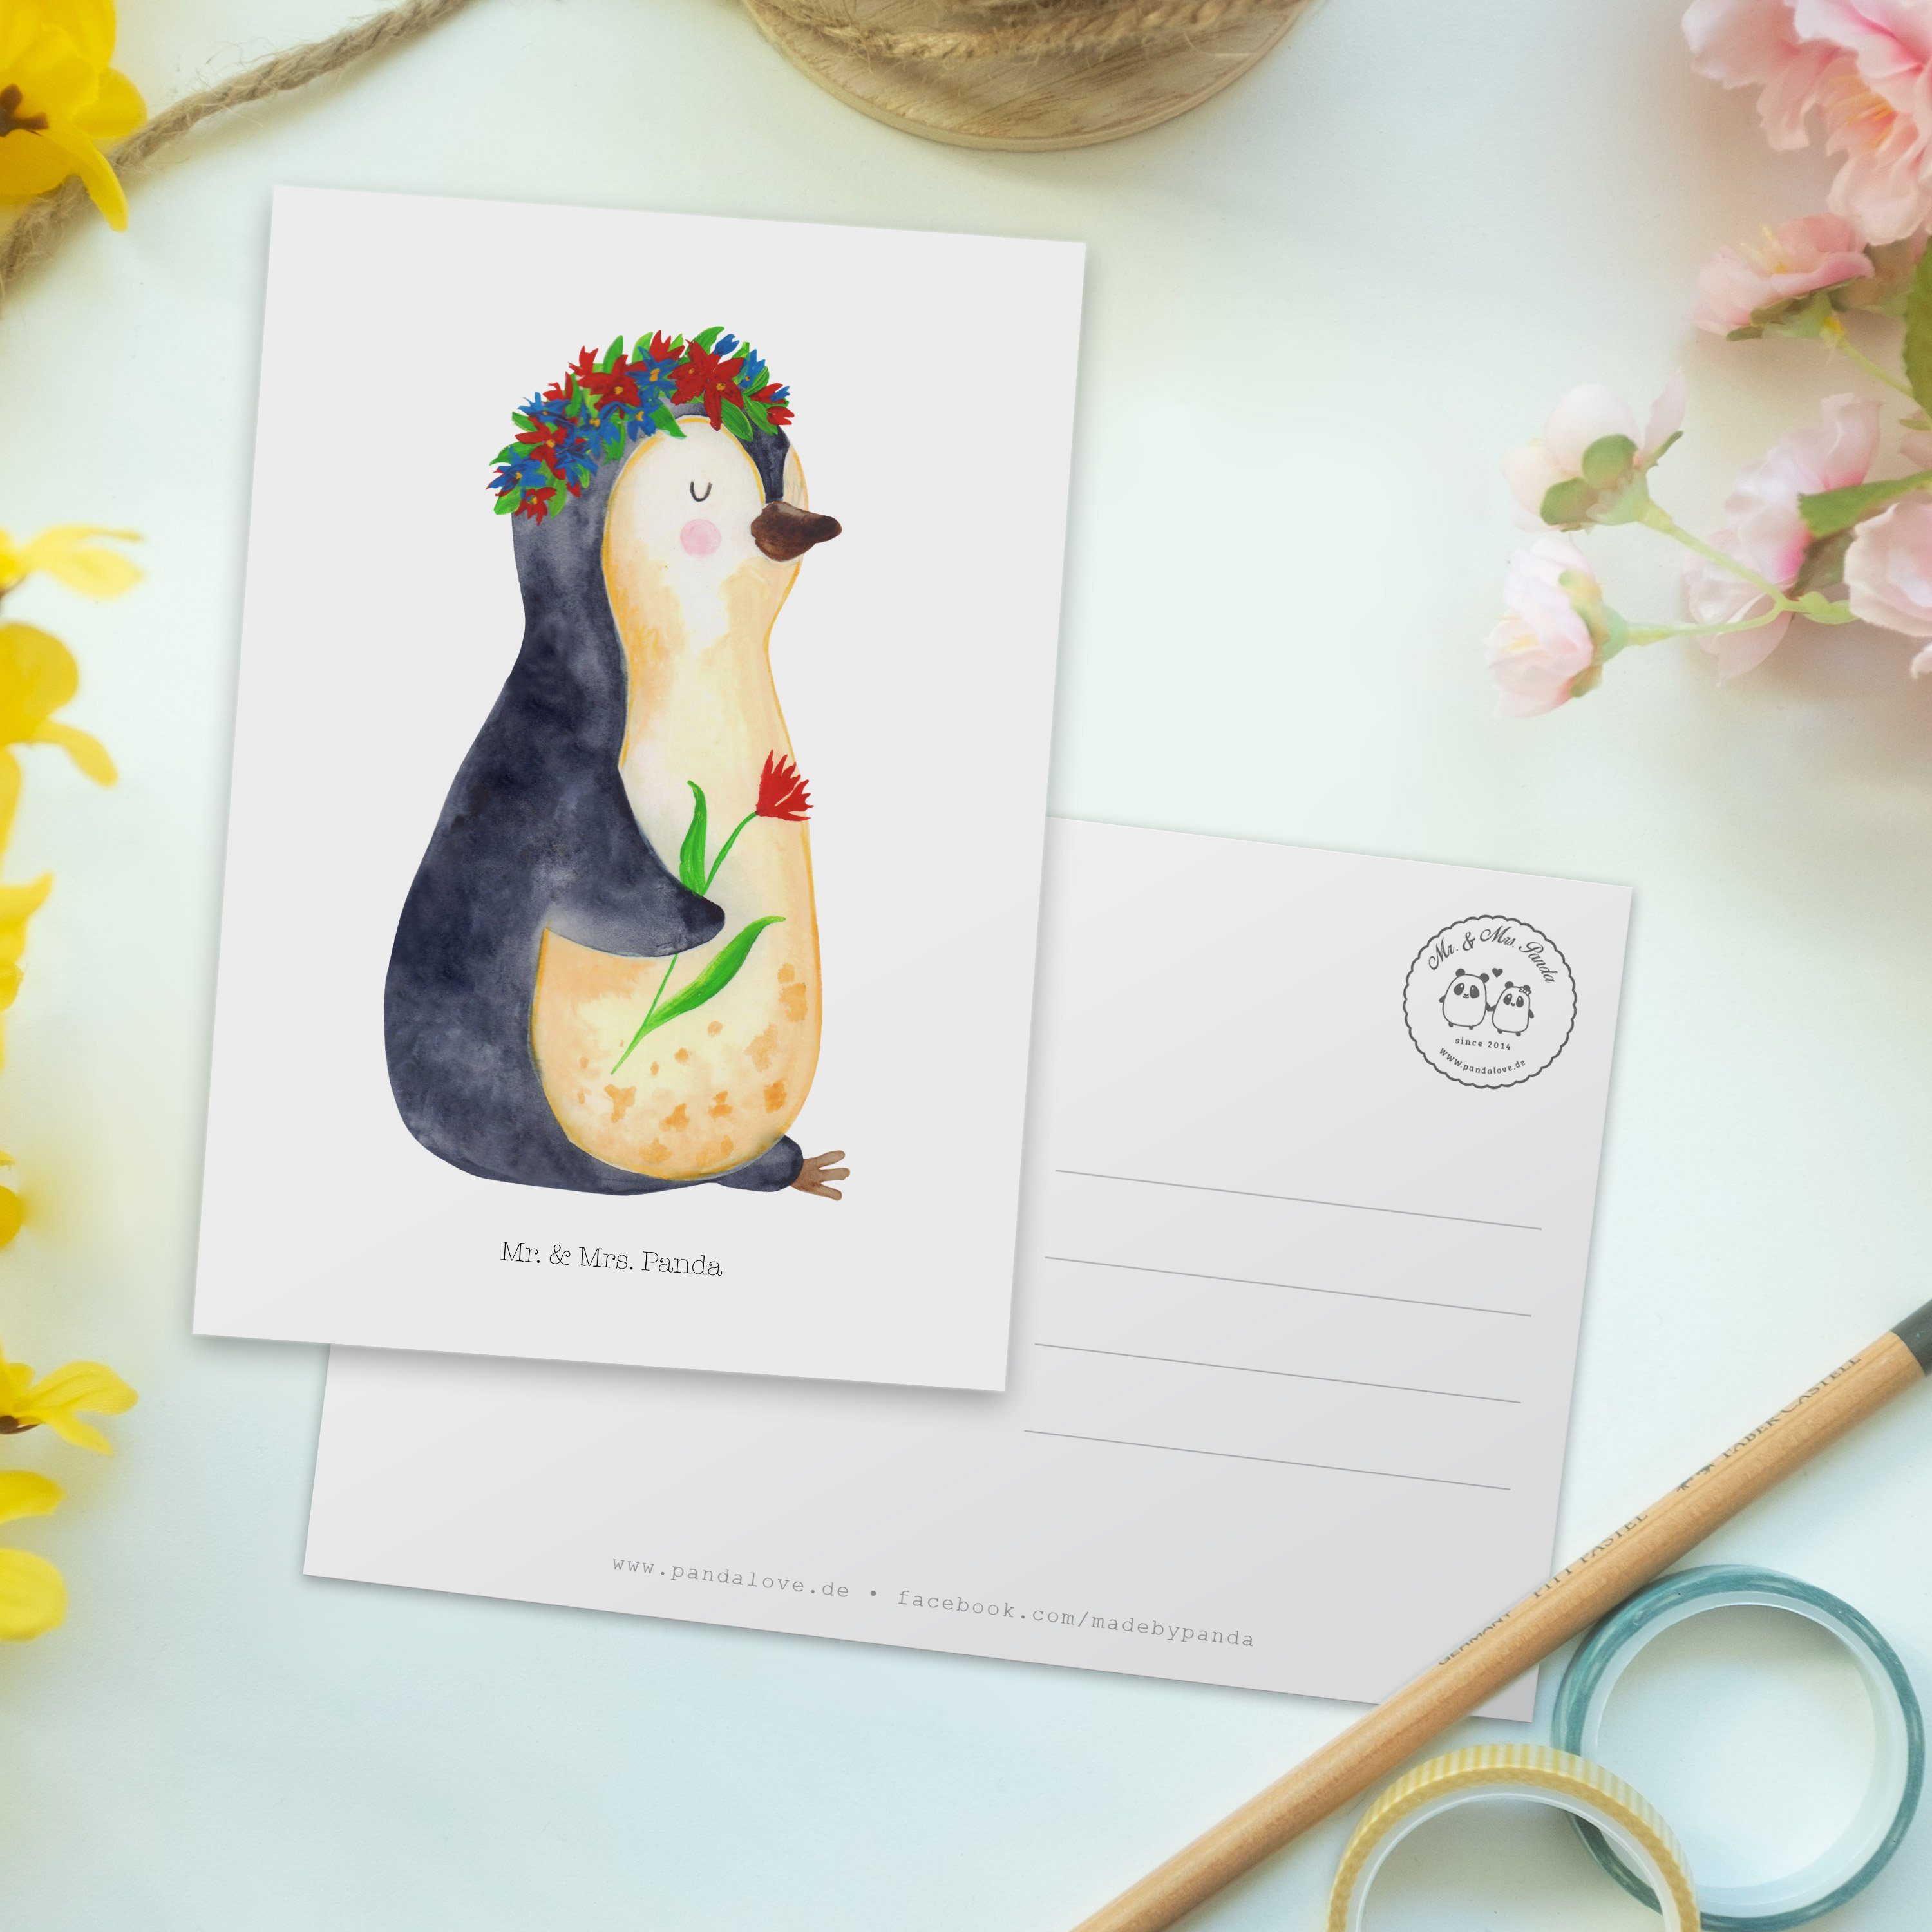 Mr. & Mrs. Panda Postkarte - - Dankeskarte, Blumenkranz Pinguin Geb Geschenk, Geschenkidee, Weiß